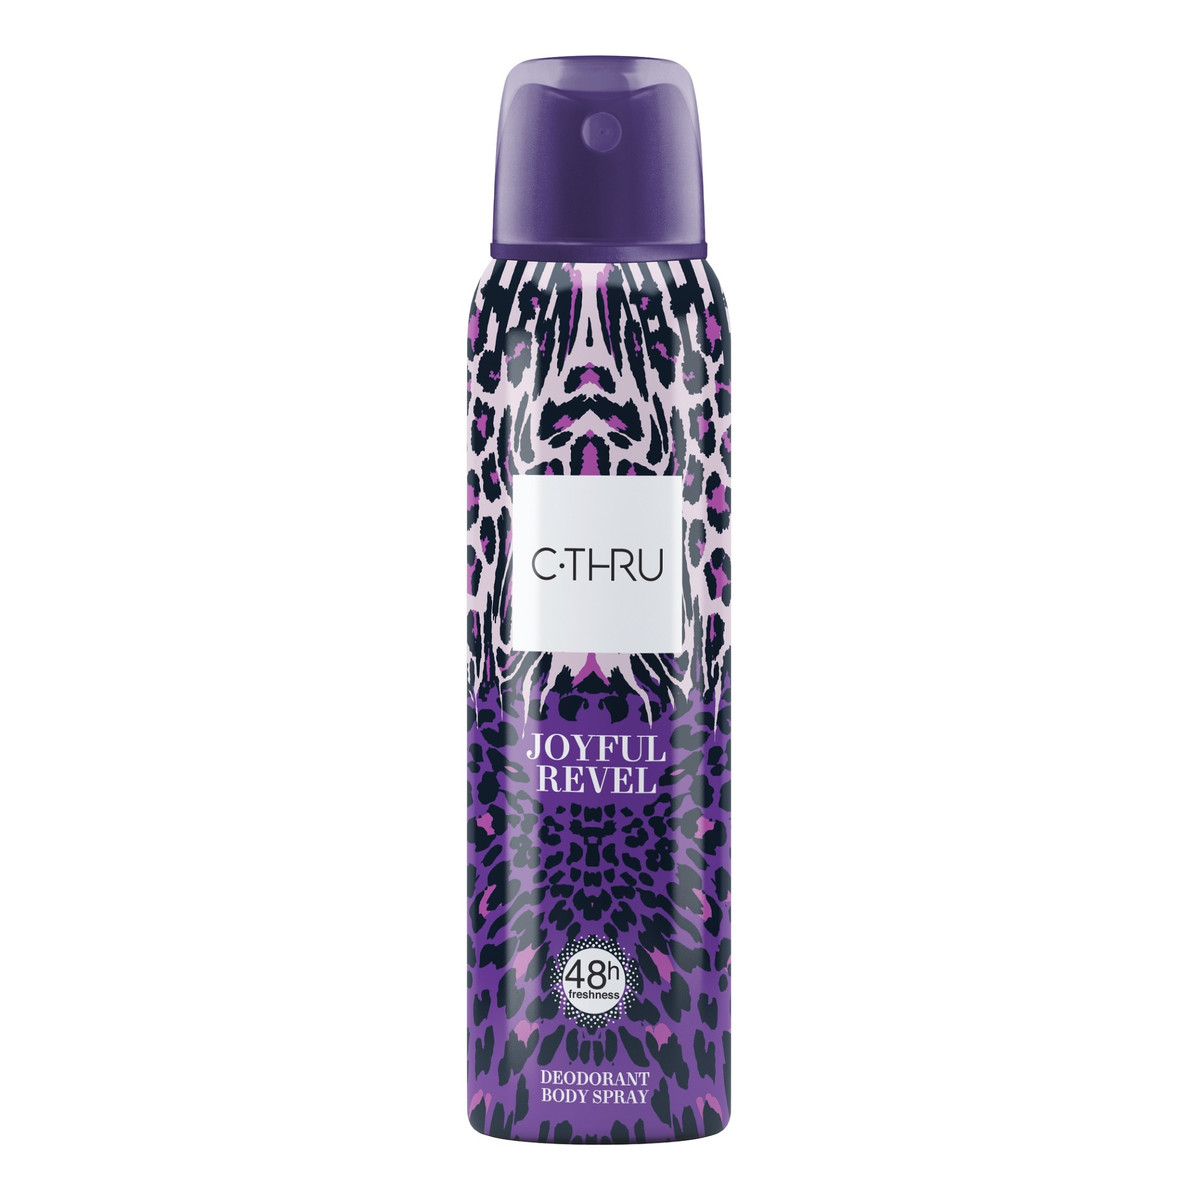 C-Thru Joyful Revel Dezodorant spray 48H 150ml